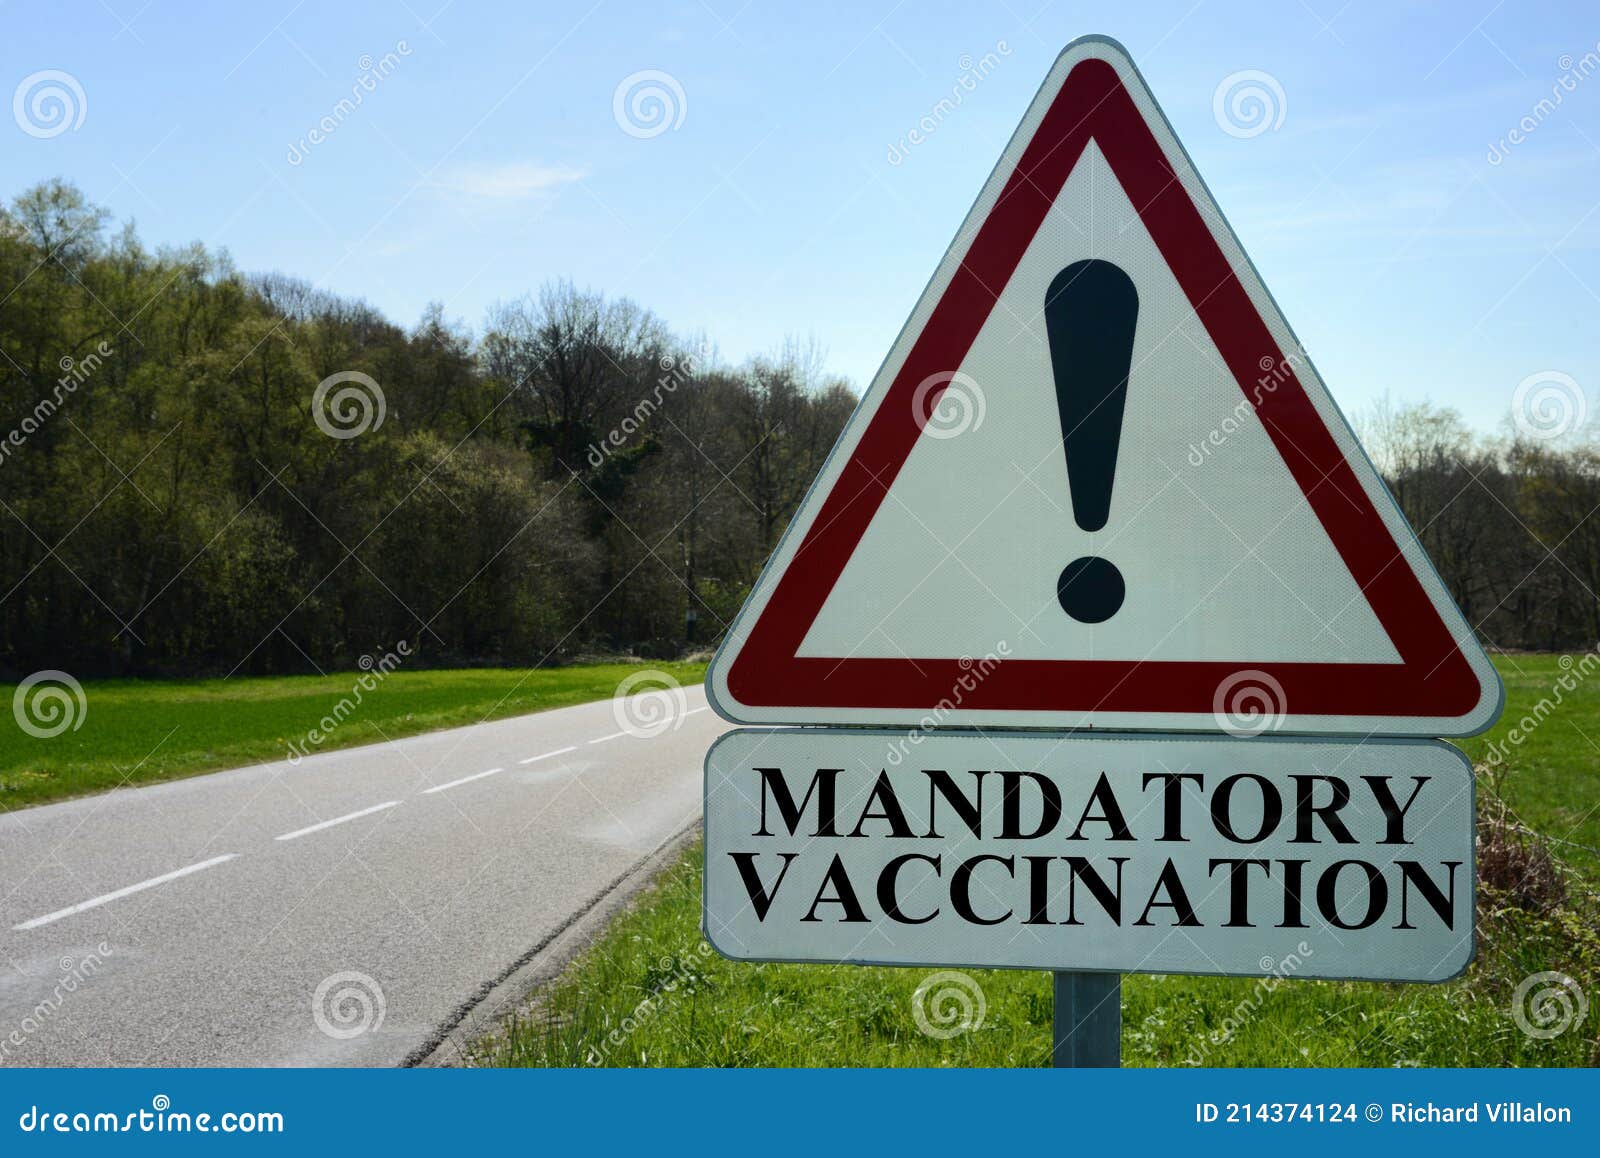 road traffic sign indicating mandatory vaccination